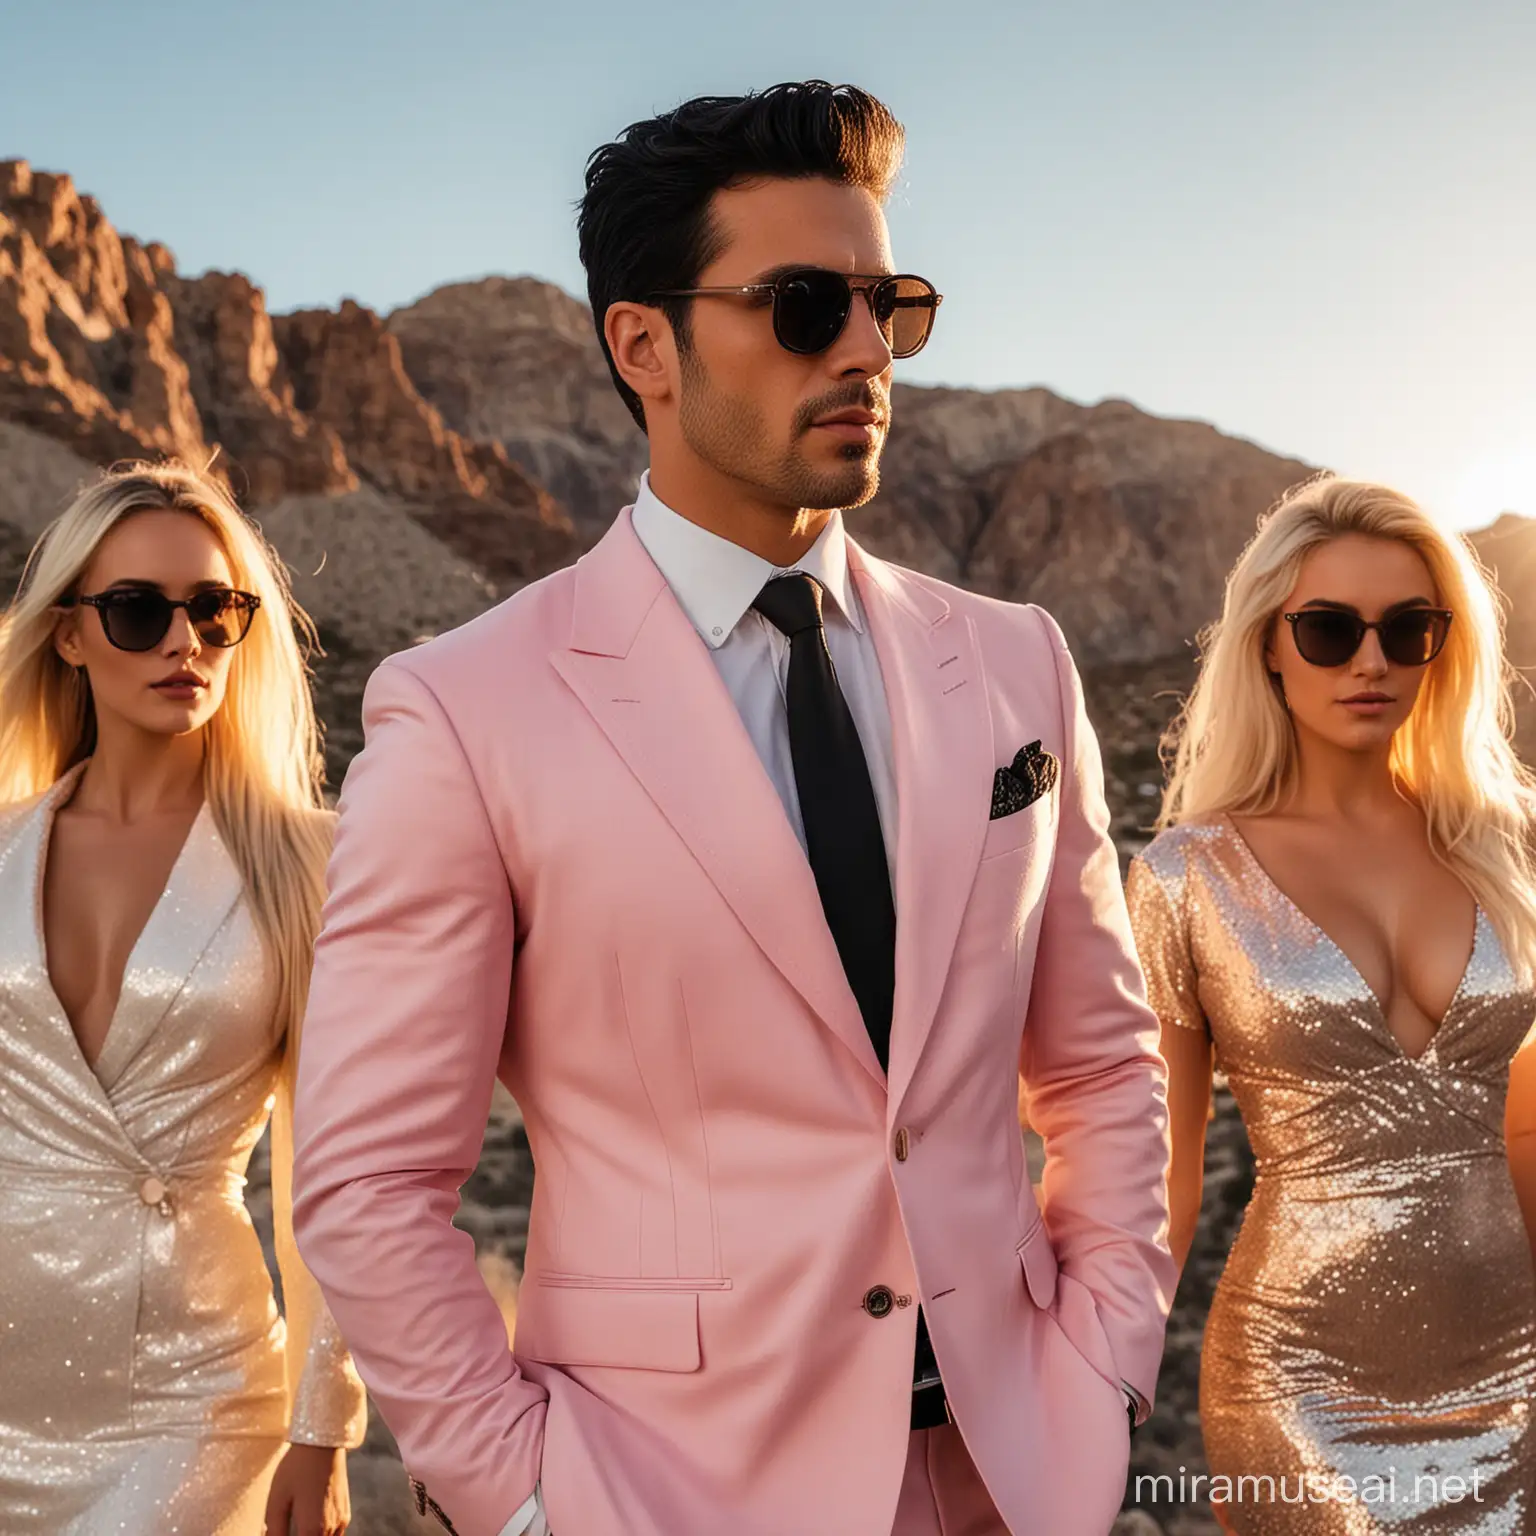 Elegant Man with Blonde Companions at Sunset in Mountainous Las Vegas